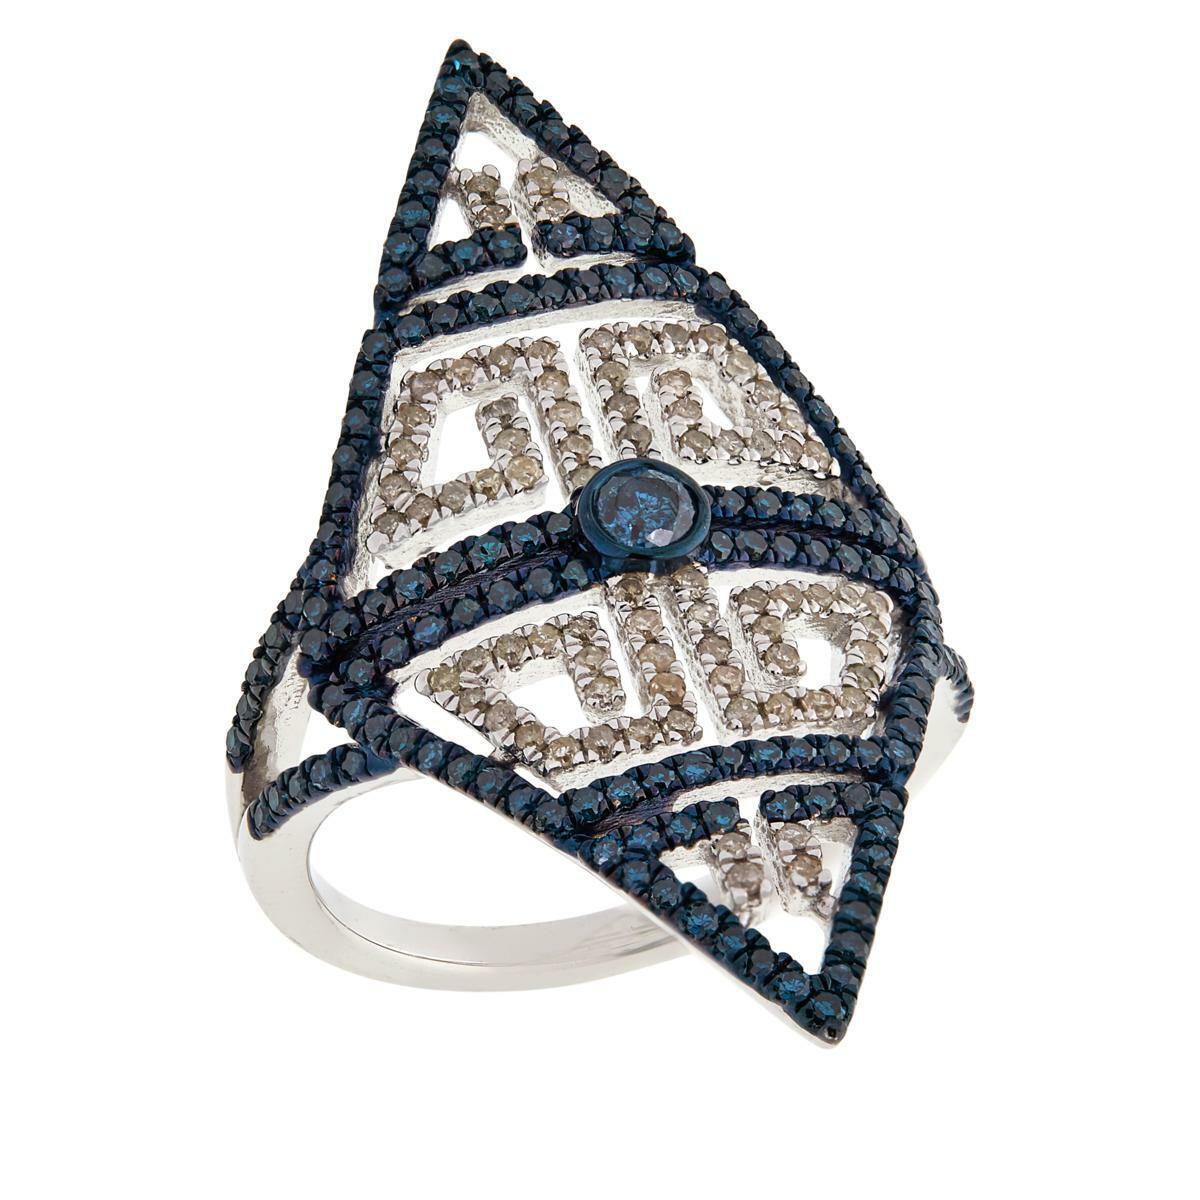 Rarities 1cttw Genuine Blue and White Diamond "Tattoo" Ring, Size 6